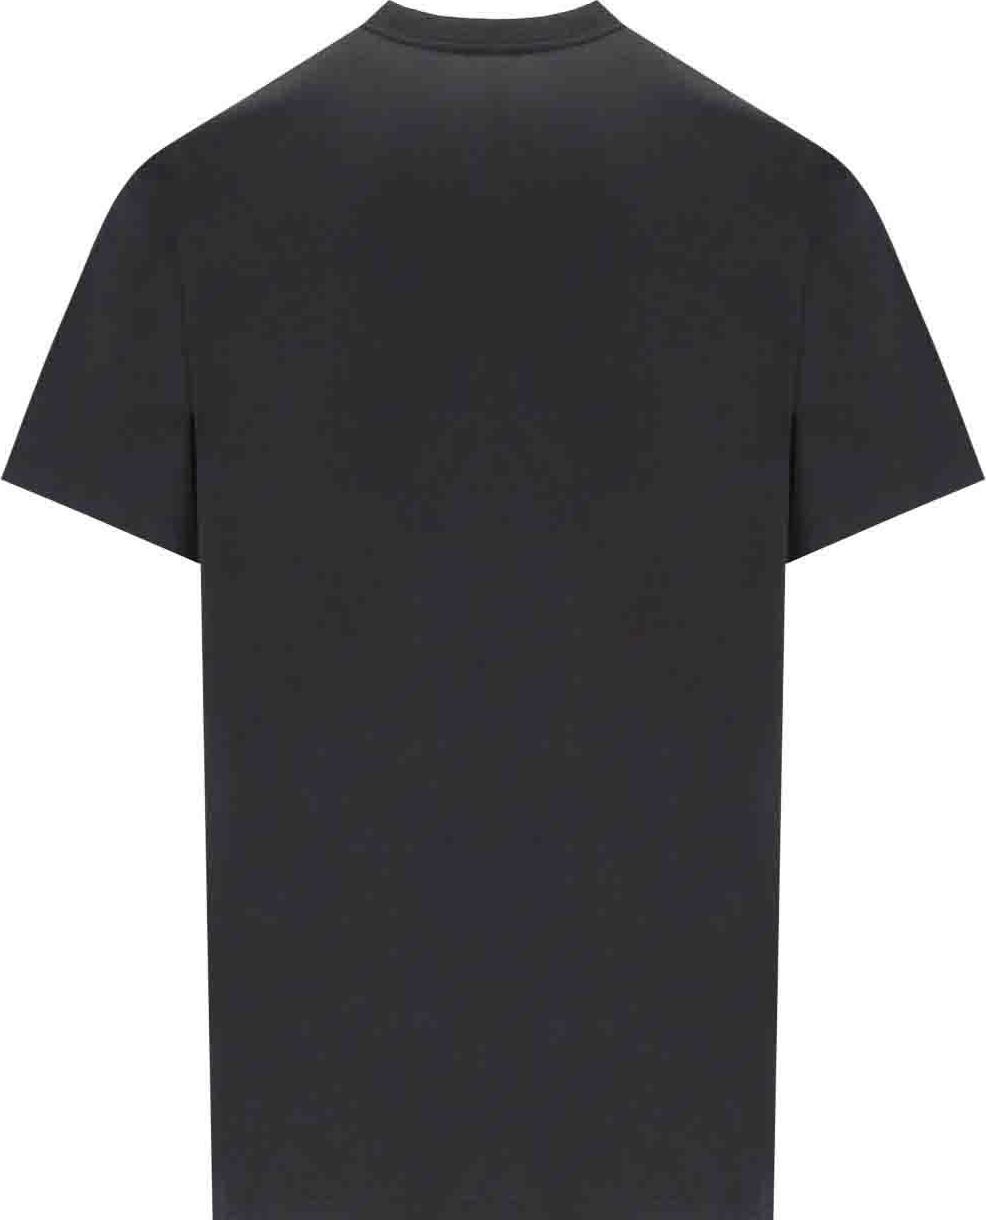 Carhartt Wip S/s Icons Black T-shirt Black Zwart